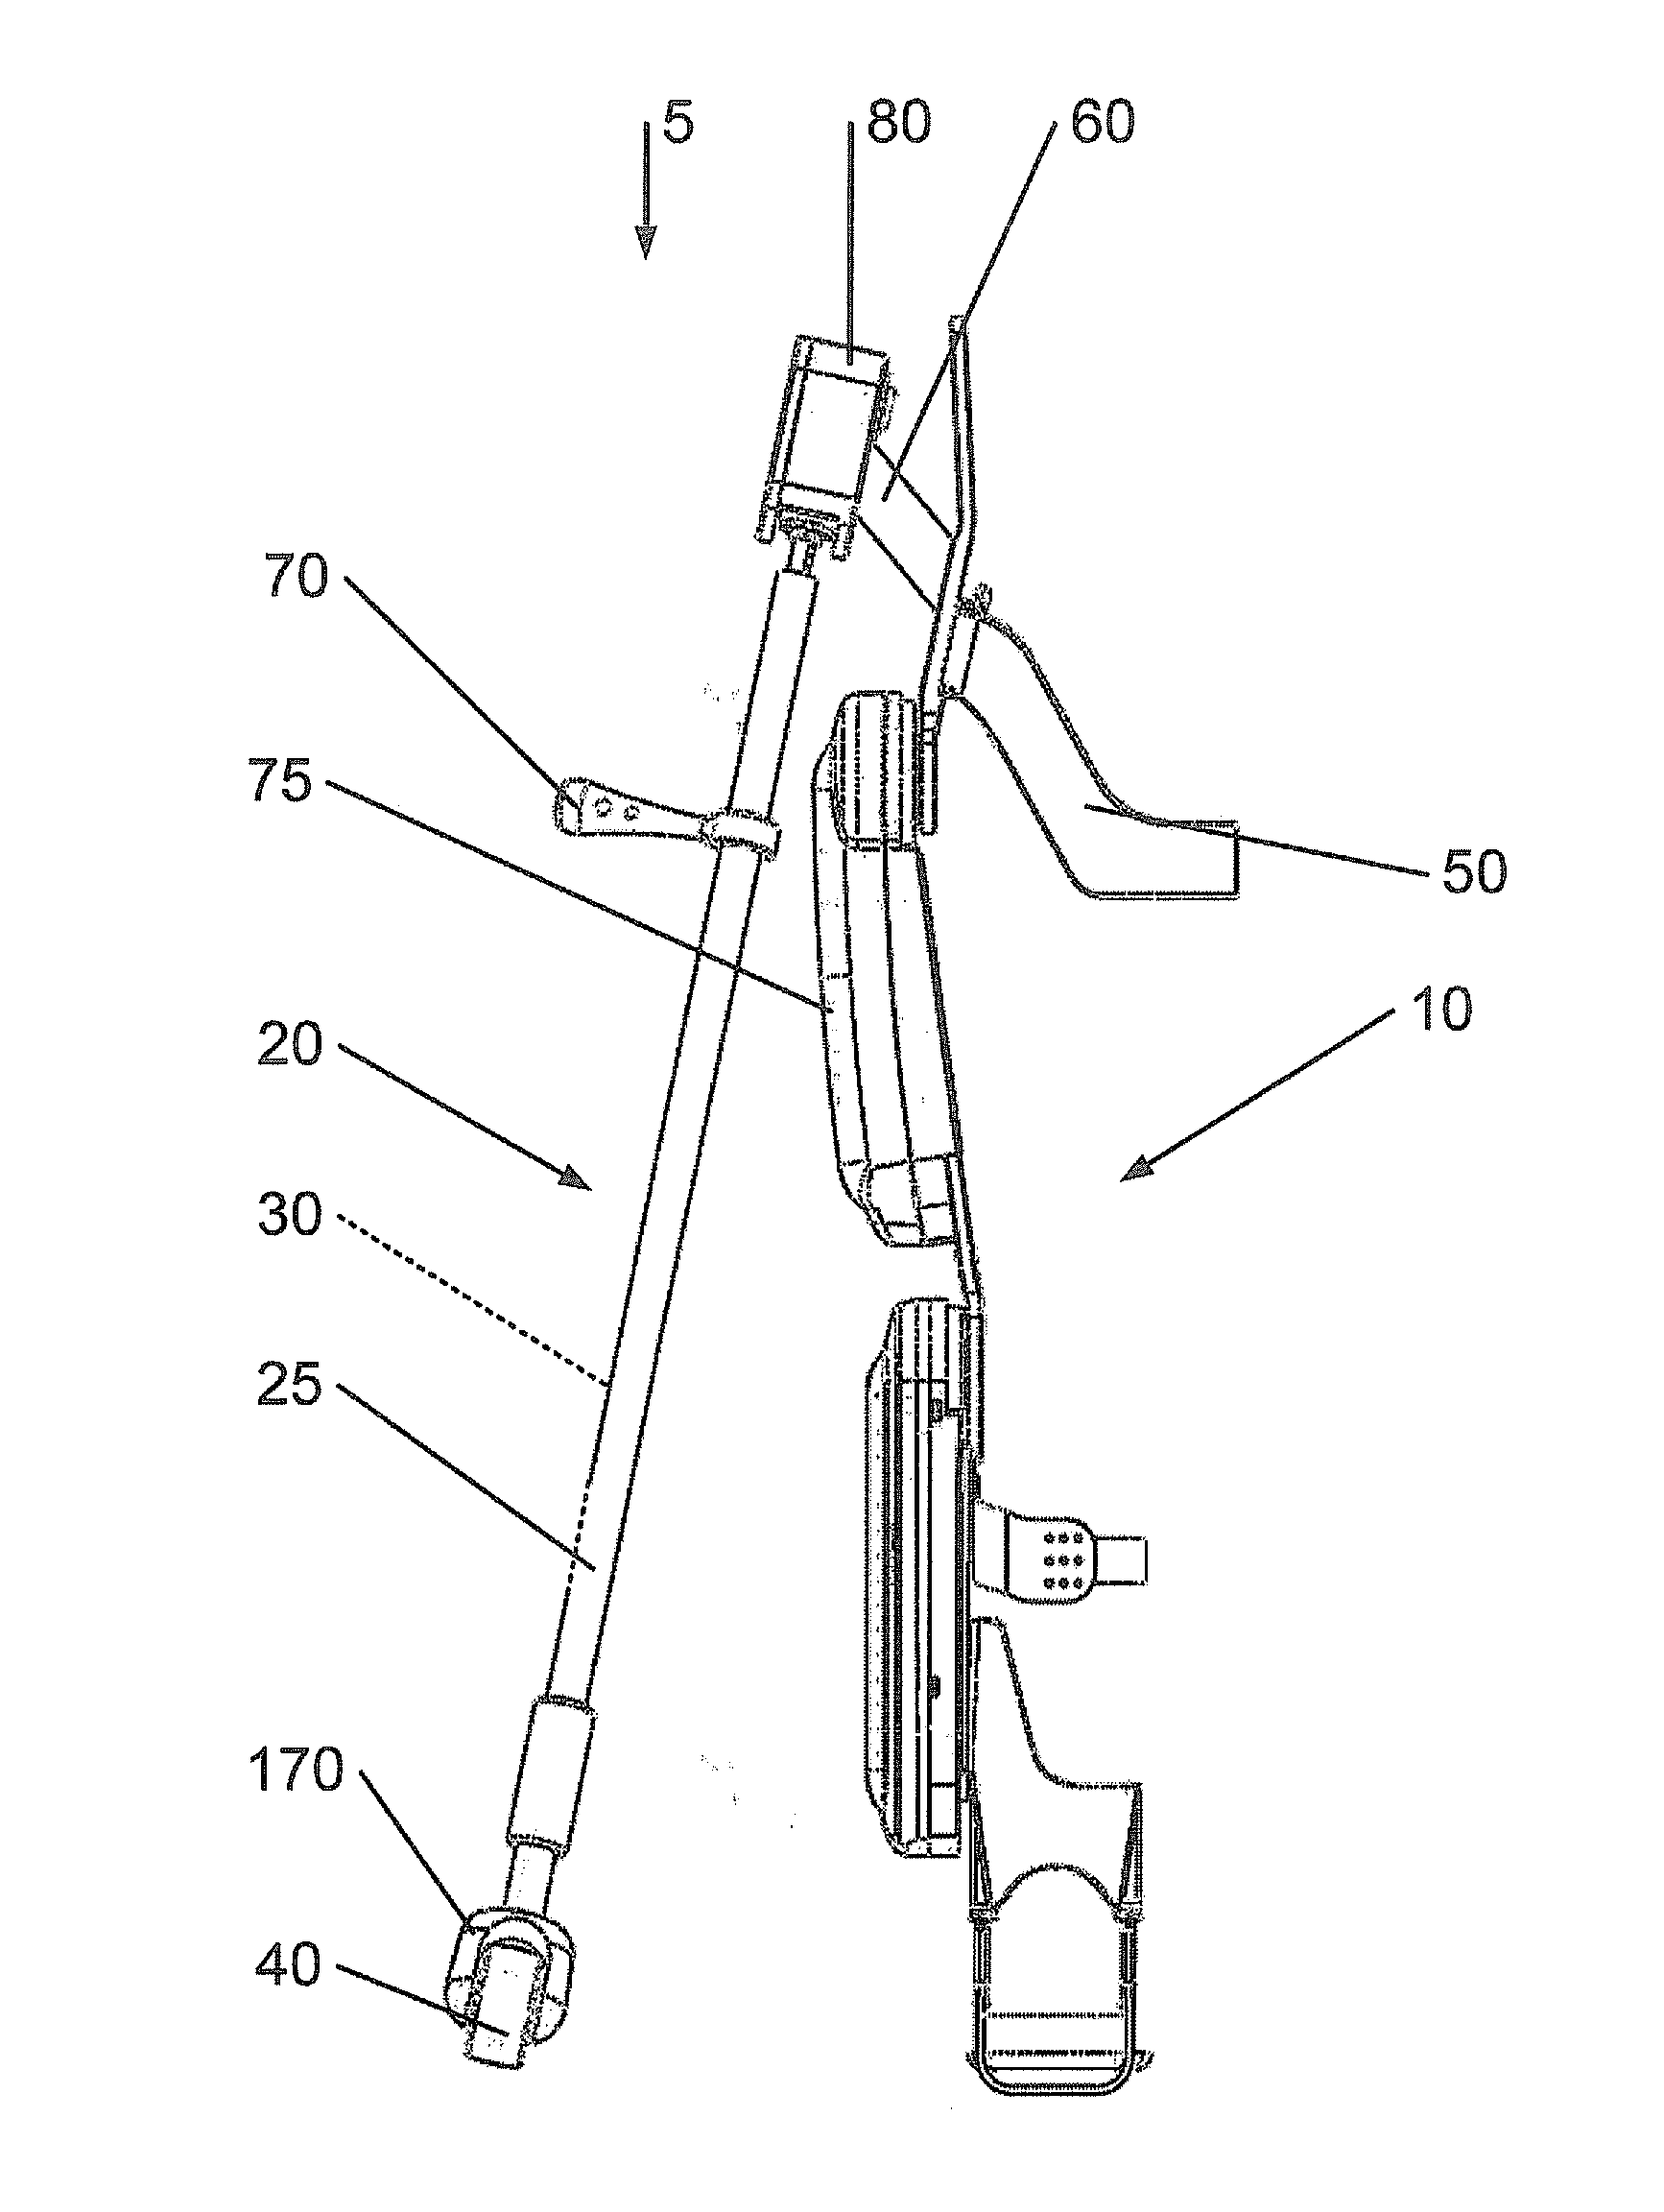 Gait device with a crutch